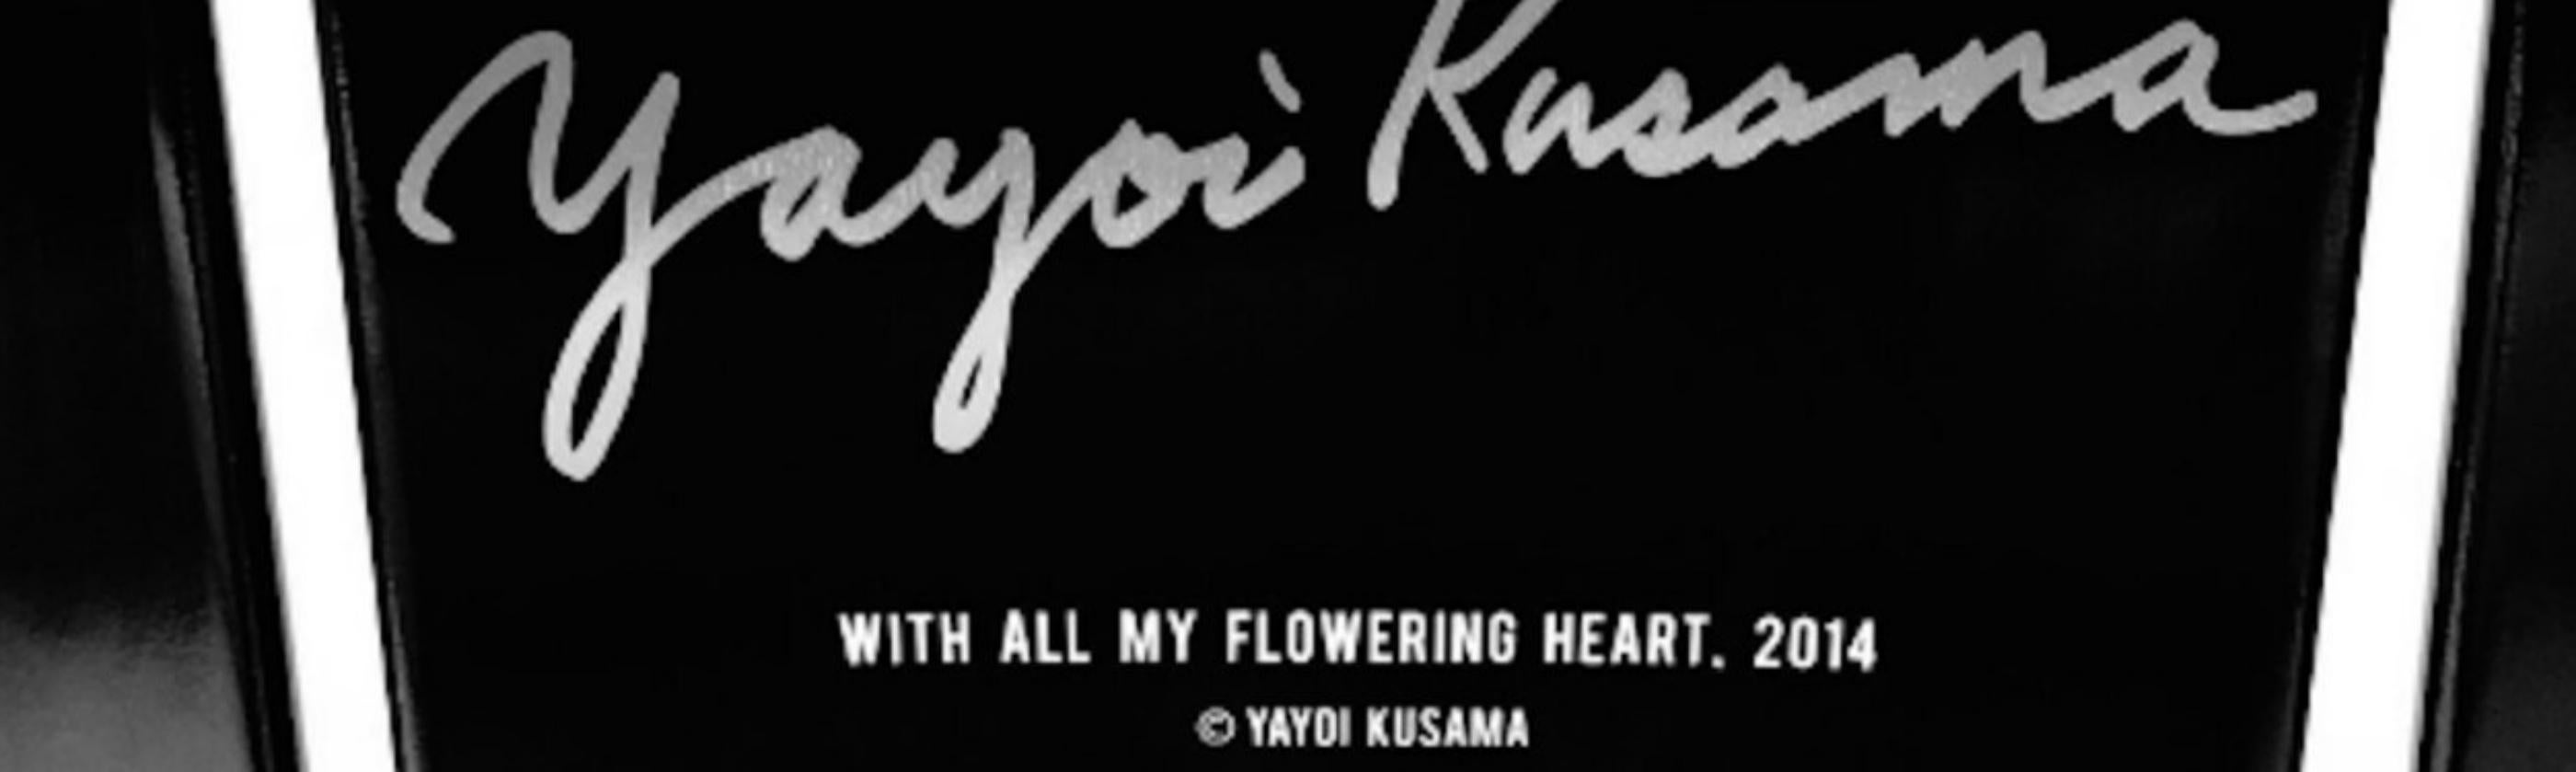 With all My Flowering Heart Skateboard Triptych, 3 Limited Edition Skate Decks  - Pop Art Print by Yayoi Kusama